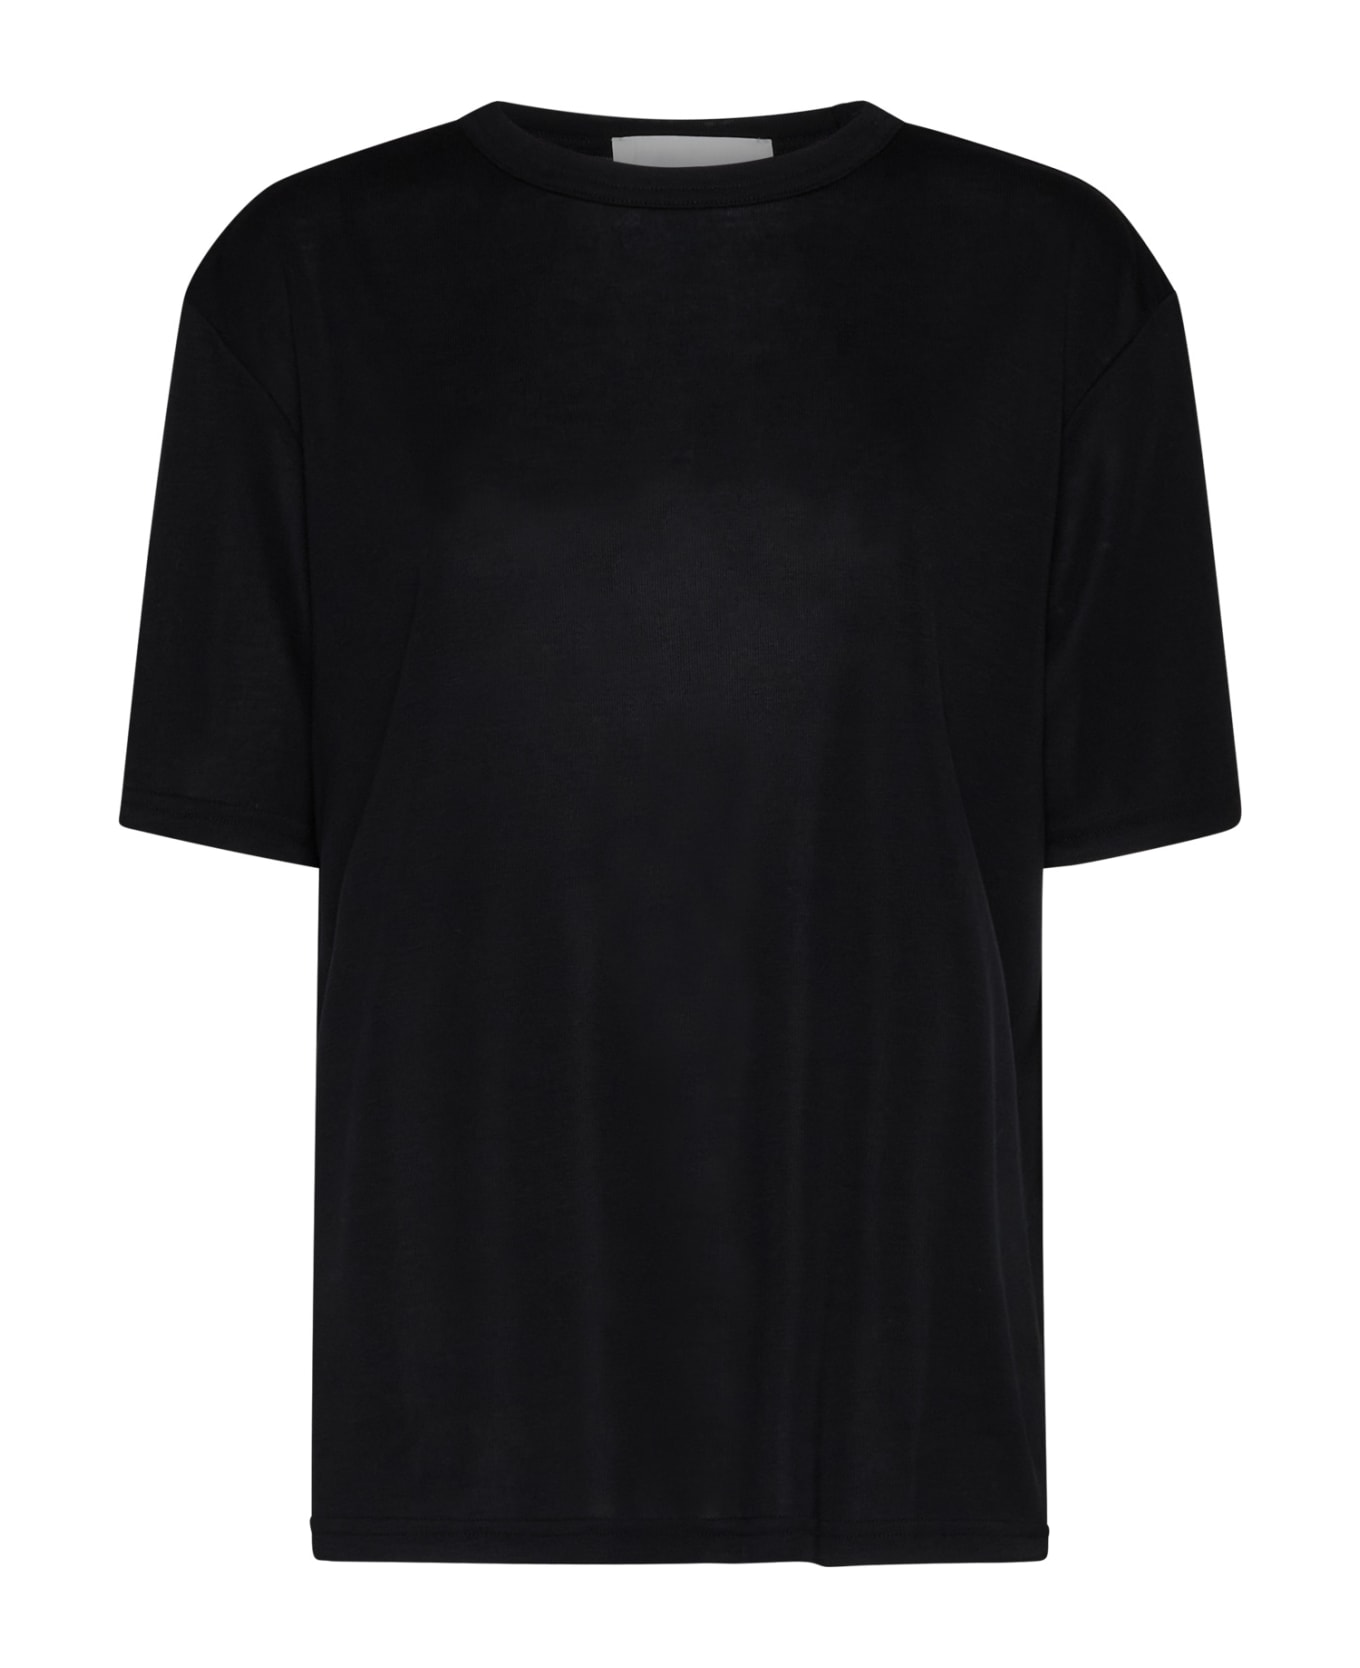 Studio Nicholson T-Shirt - Black Tシャツ